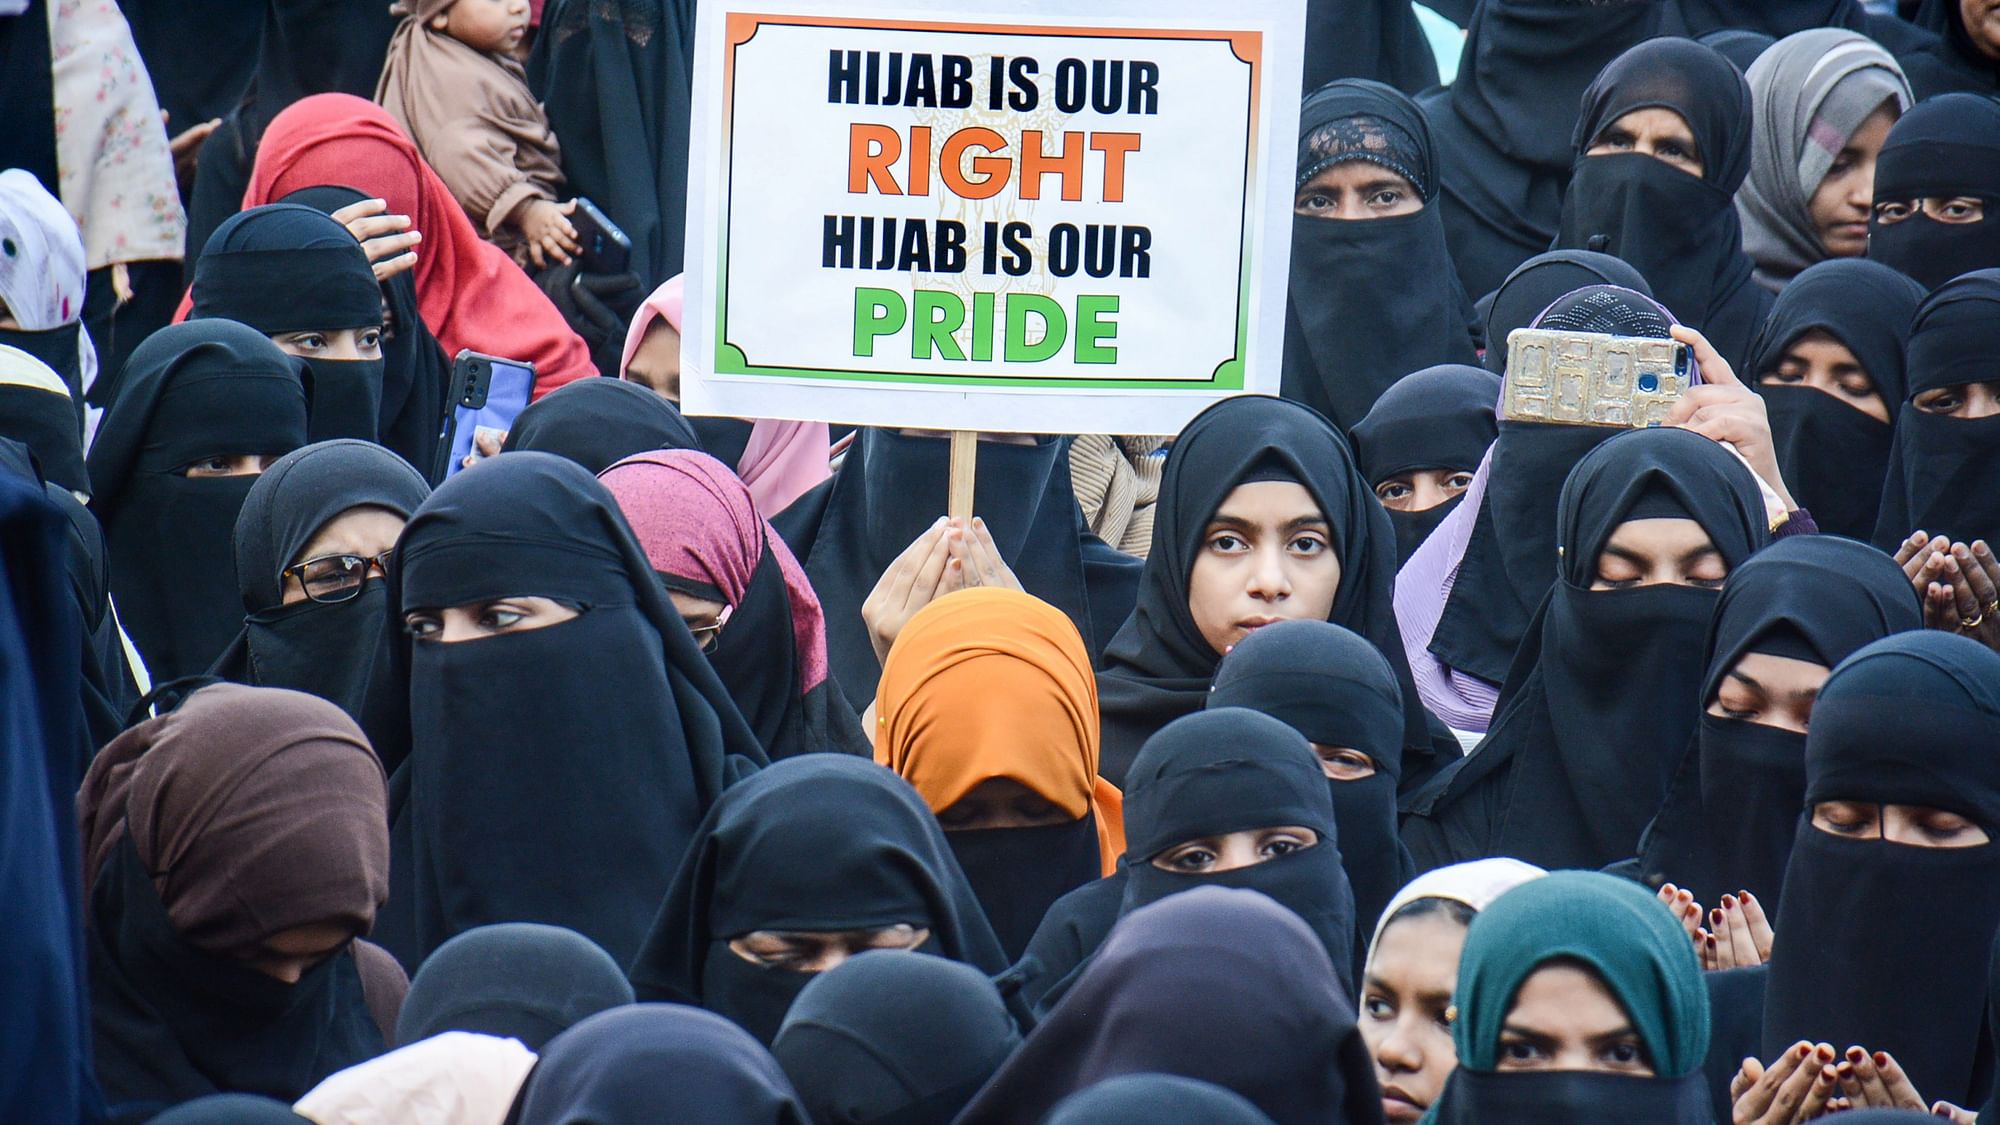 <div class="paragraphs"><p>Karnataka Hijab Row Live News</p></div>